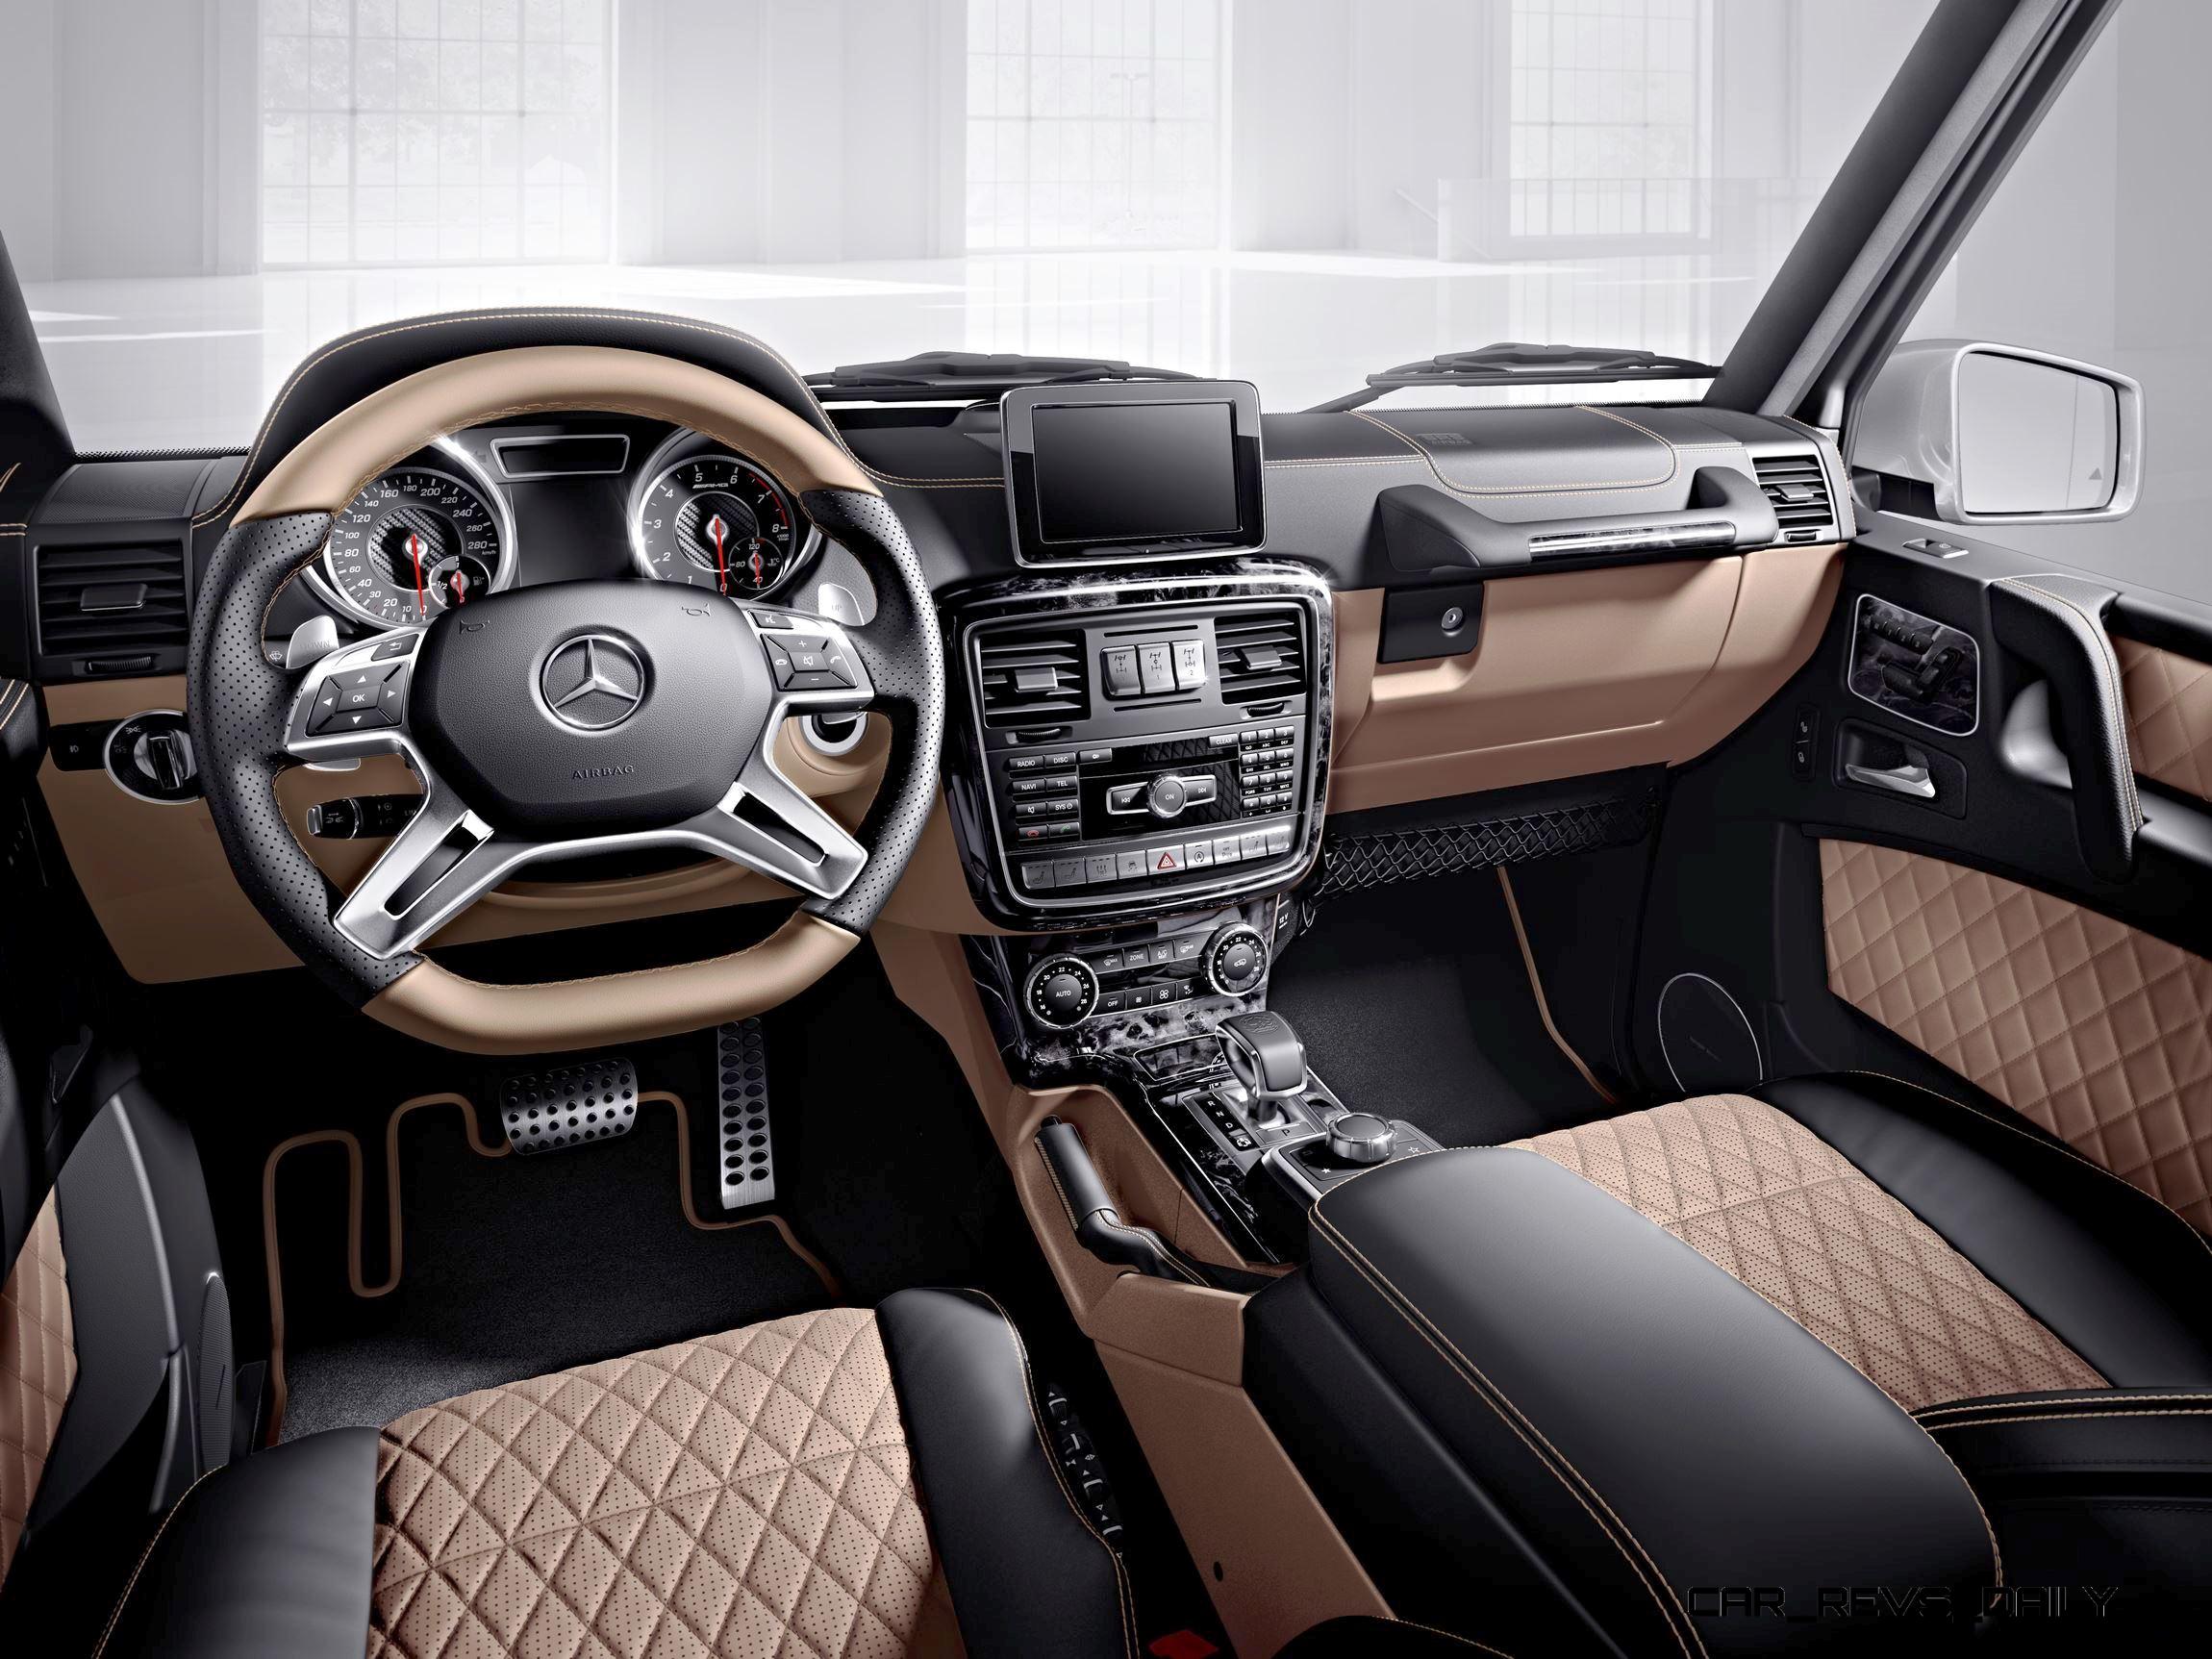 Old Mercedes G Wagon Interior : G wagon interior | Mercedes benz g